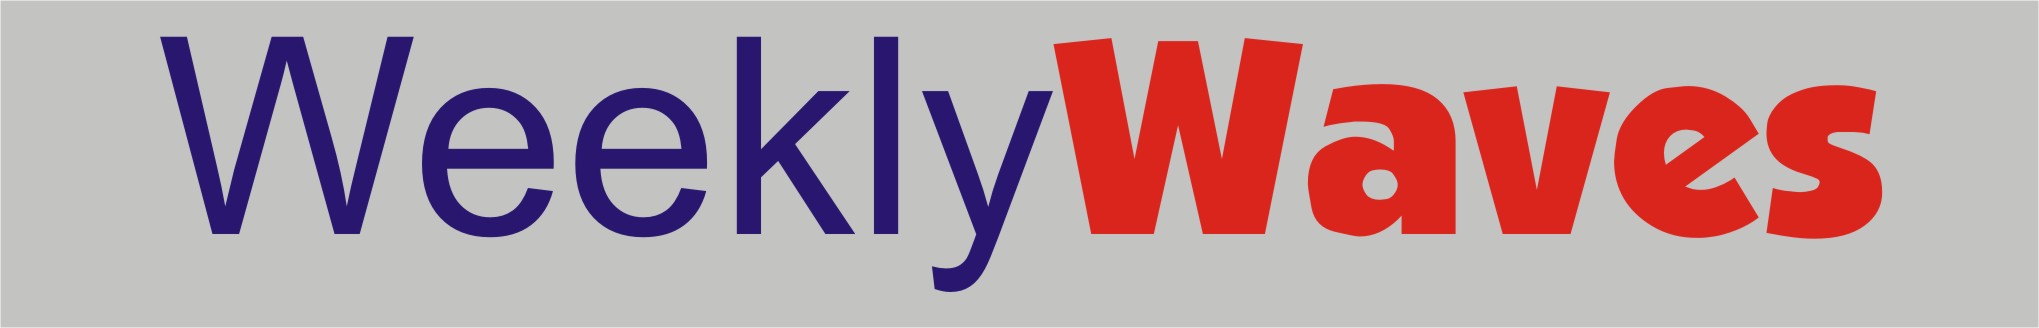 Weekly Waves logo